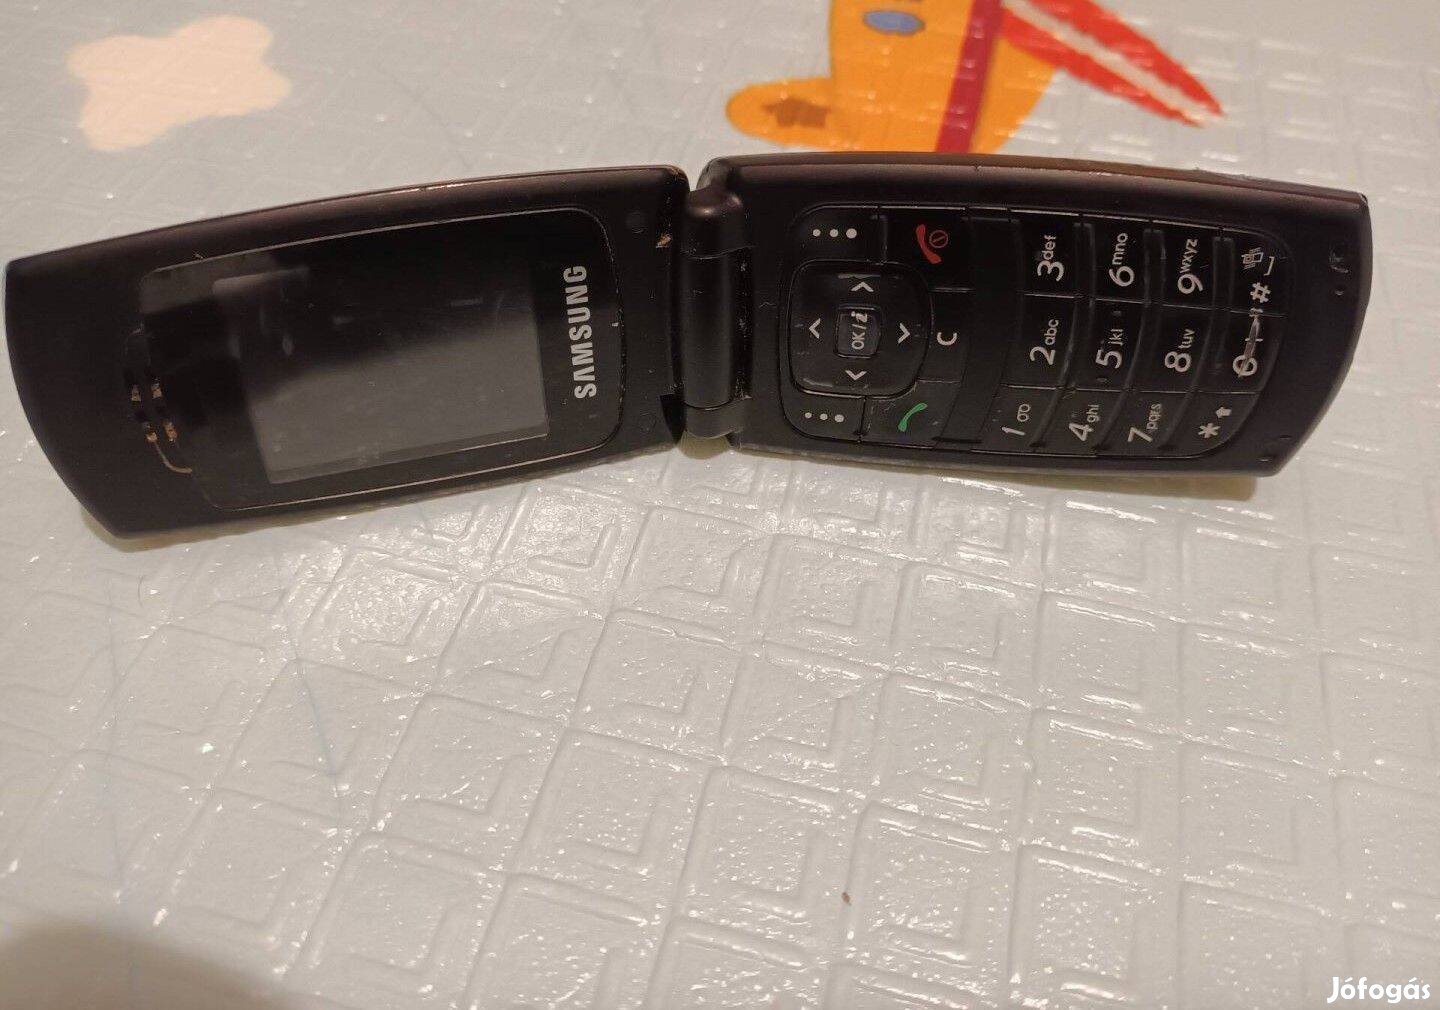 Samsung Sgh-X160 mobil eladó